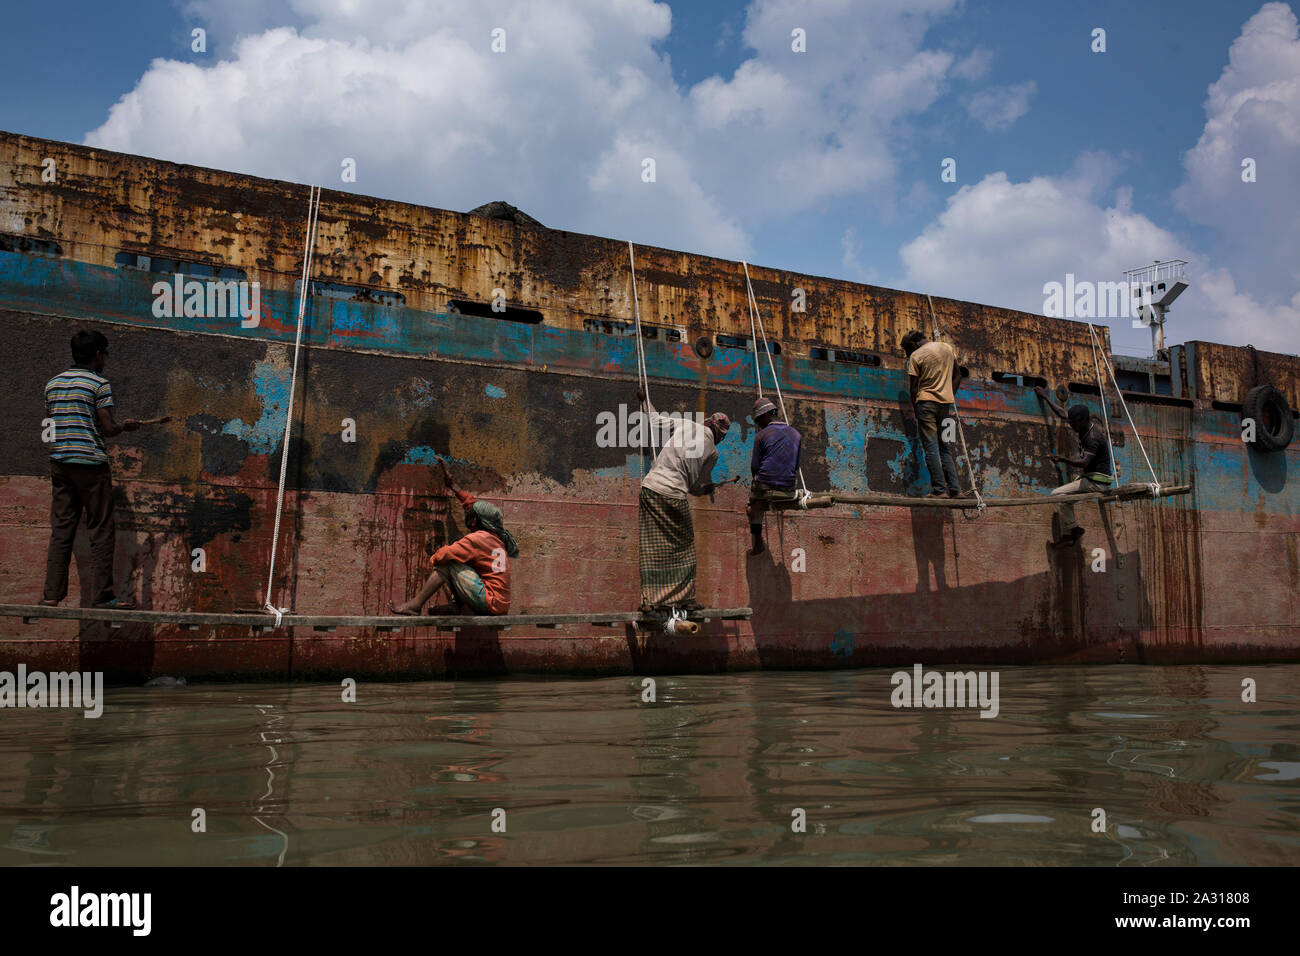 DHAKA, BANGLADESCH - Oktober 04: Bangladesch Arbeiter arbeiten in einer Werft neben dem Fluss Buriganga in Dhaka, Bangladesch am 04 Oktober, 2019. Es ar Stockfoto